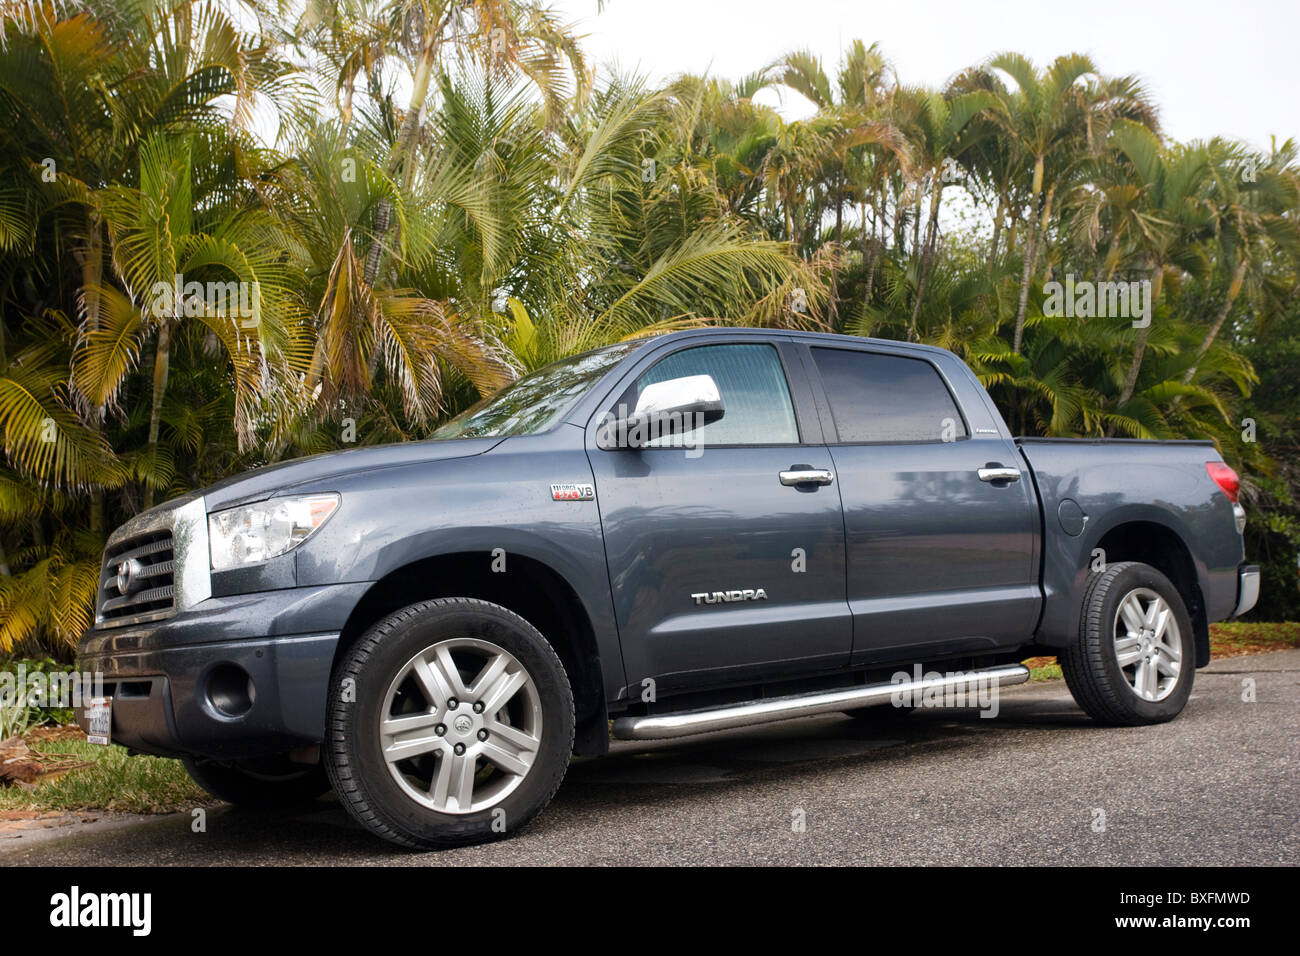 Toyota Tundra pickup truck on Anna Maria Island, Florida sunshine state, United States of America Stock Photo